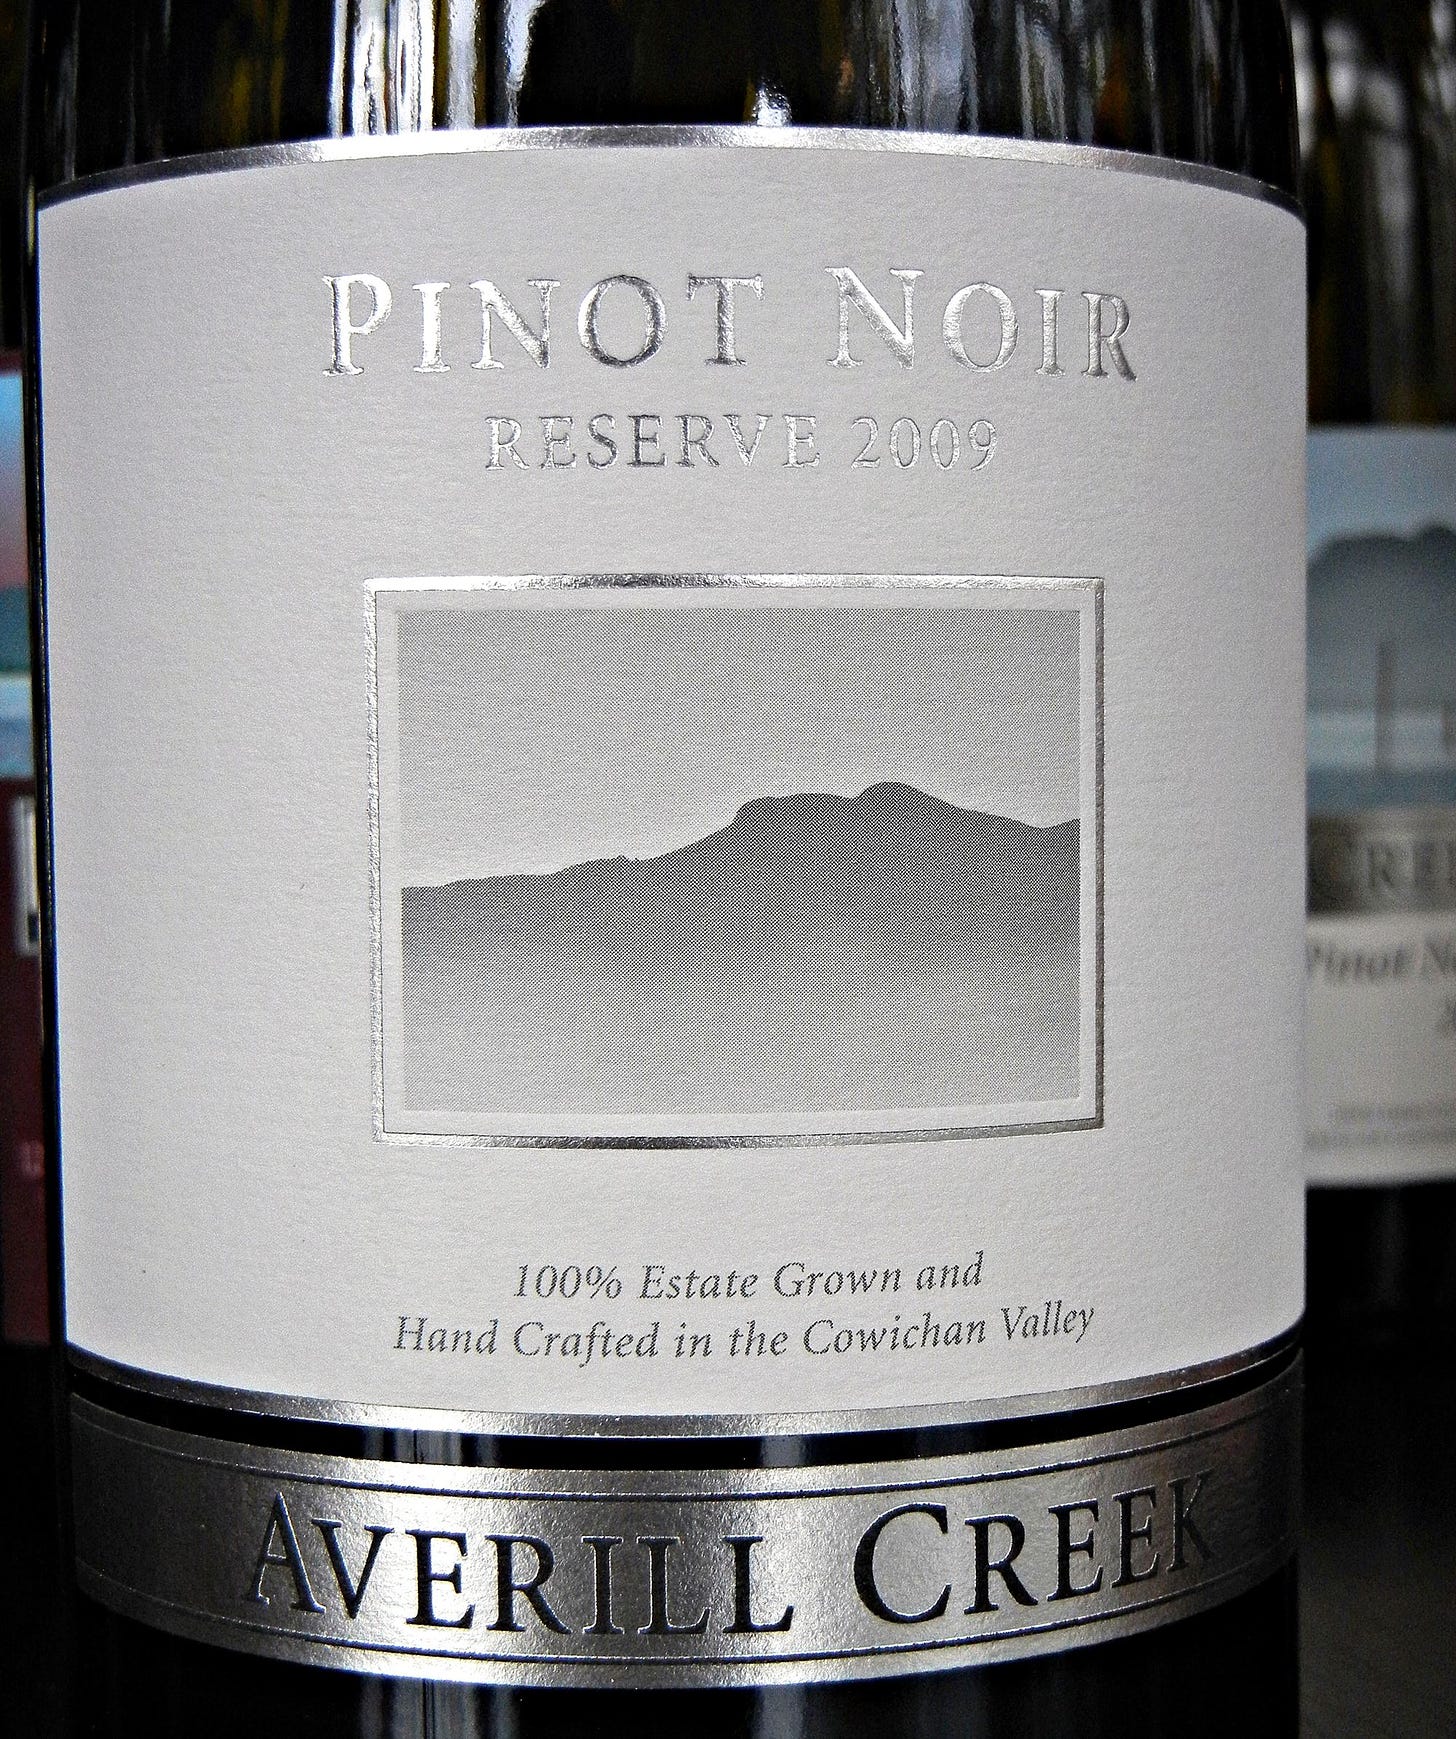 Averill Creek Pinot Noir Reserve 2009 Label - BC Pinot Noir Tasting Review 24